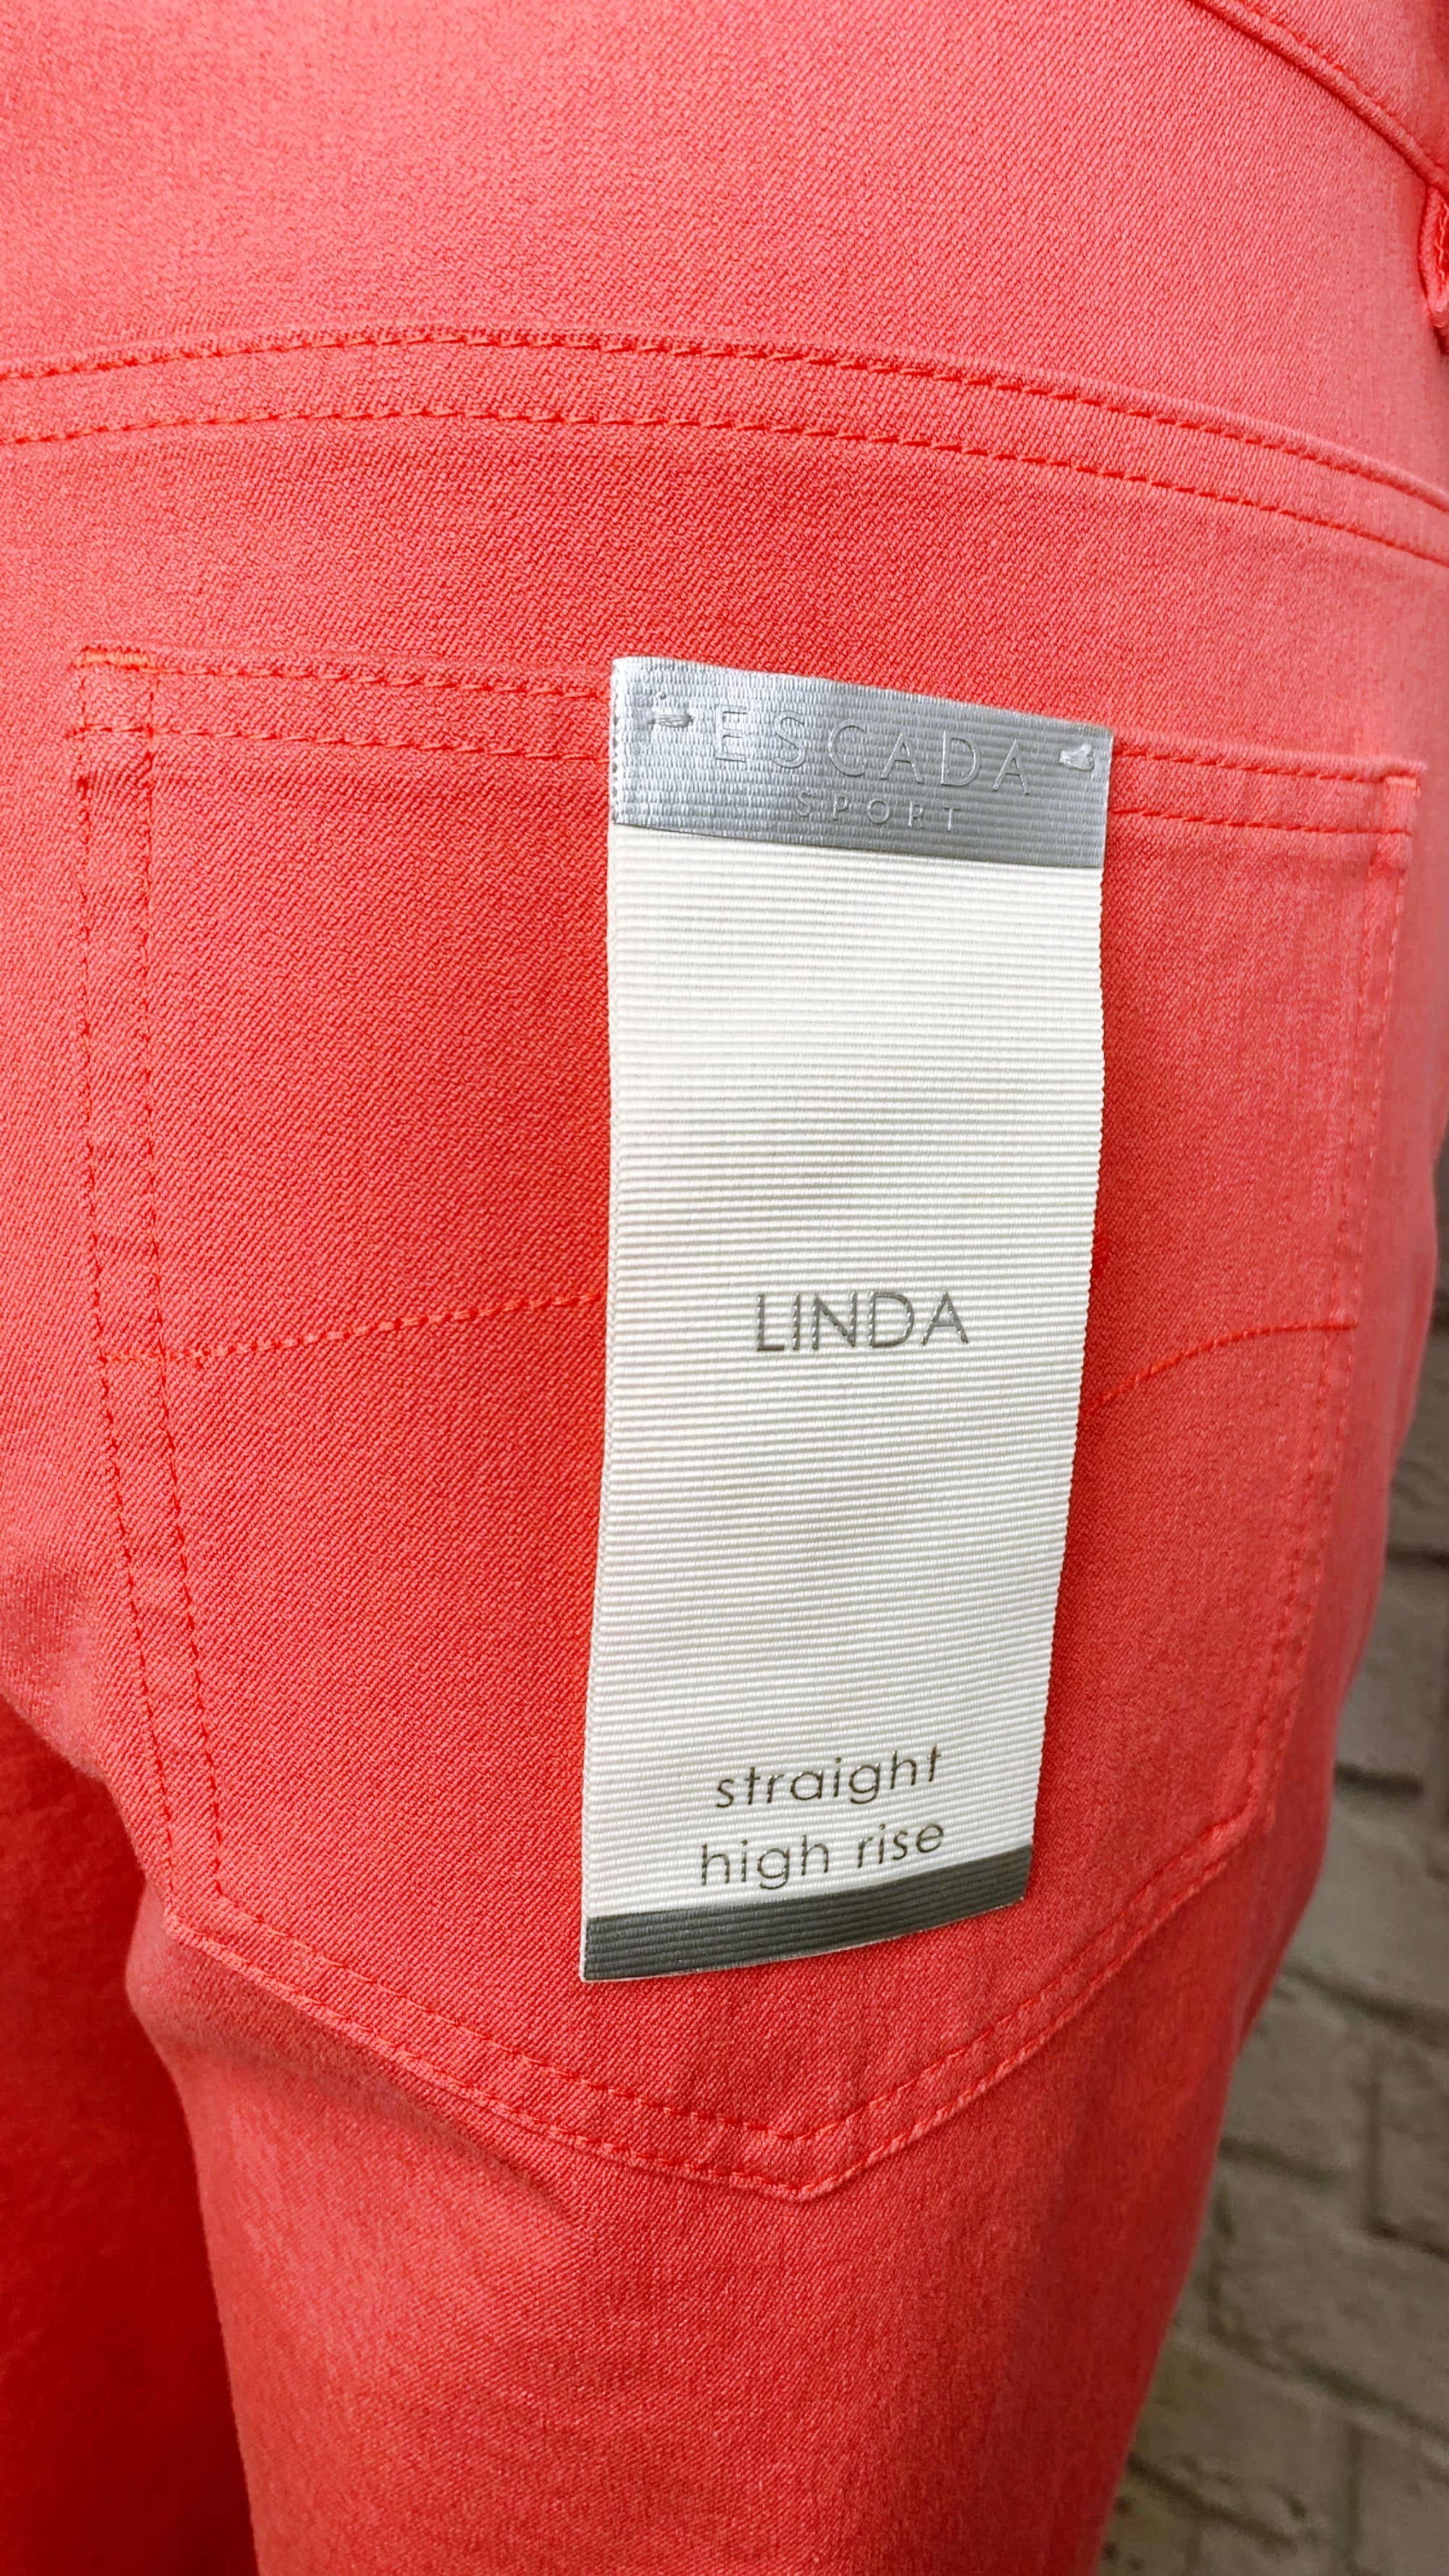 Pink Escada Sport Linda Jeans  Women's Designer Jeans For Less